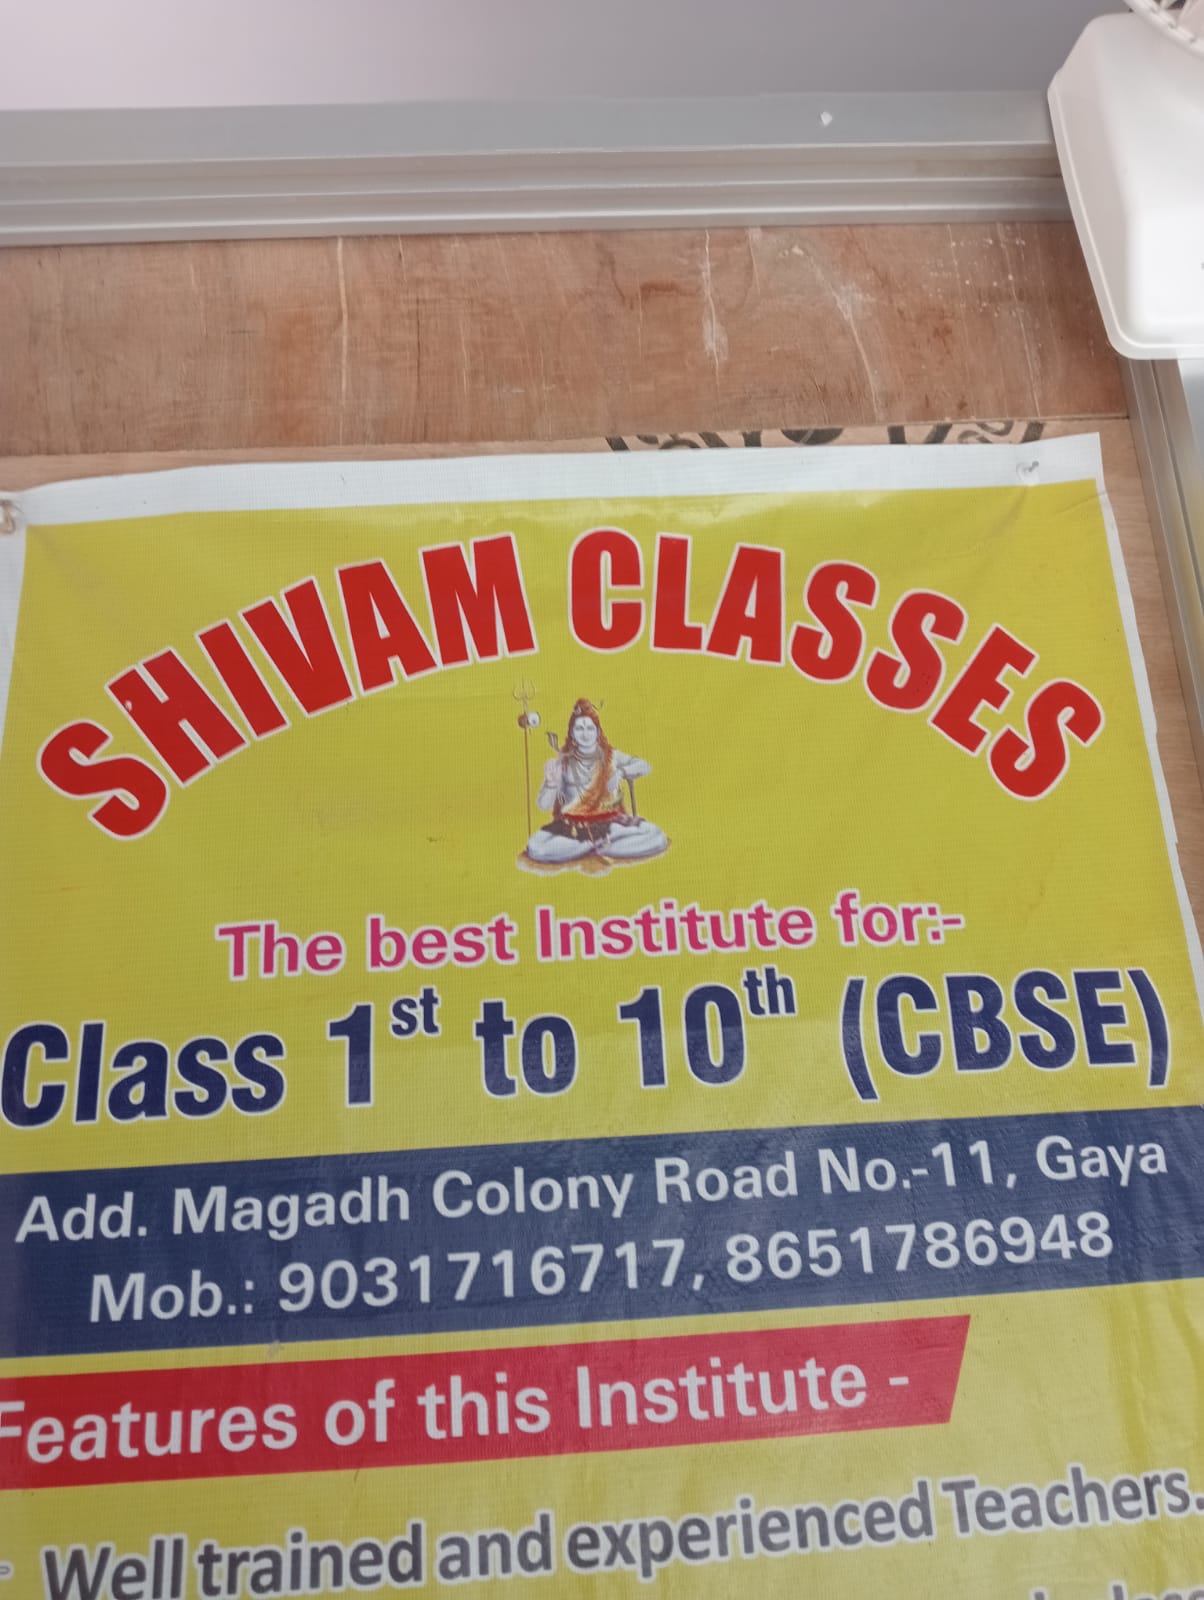 Class 1 to 10th CBSE near chandauti more Gaya